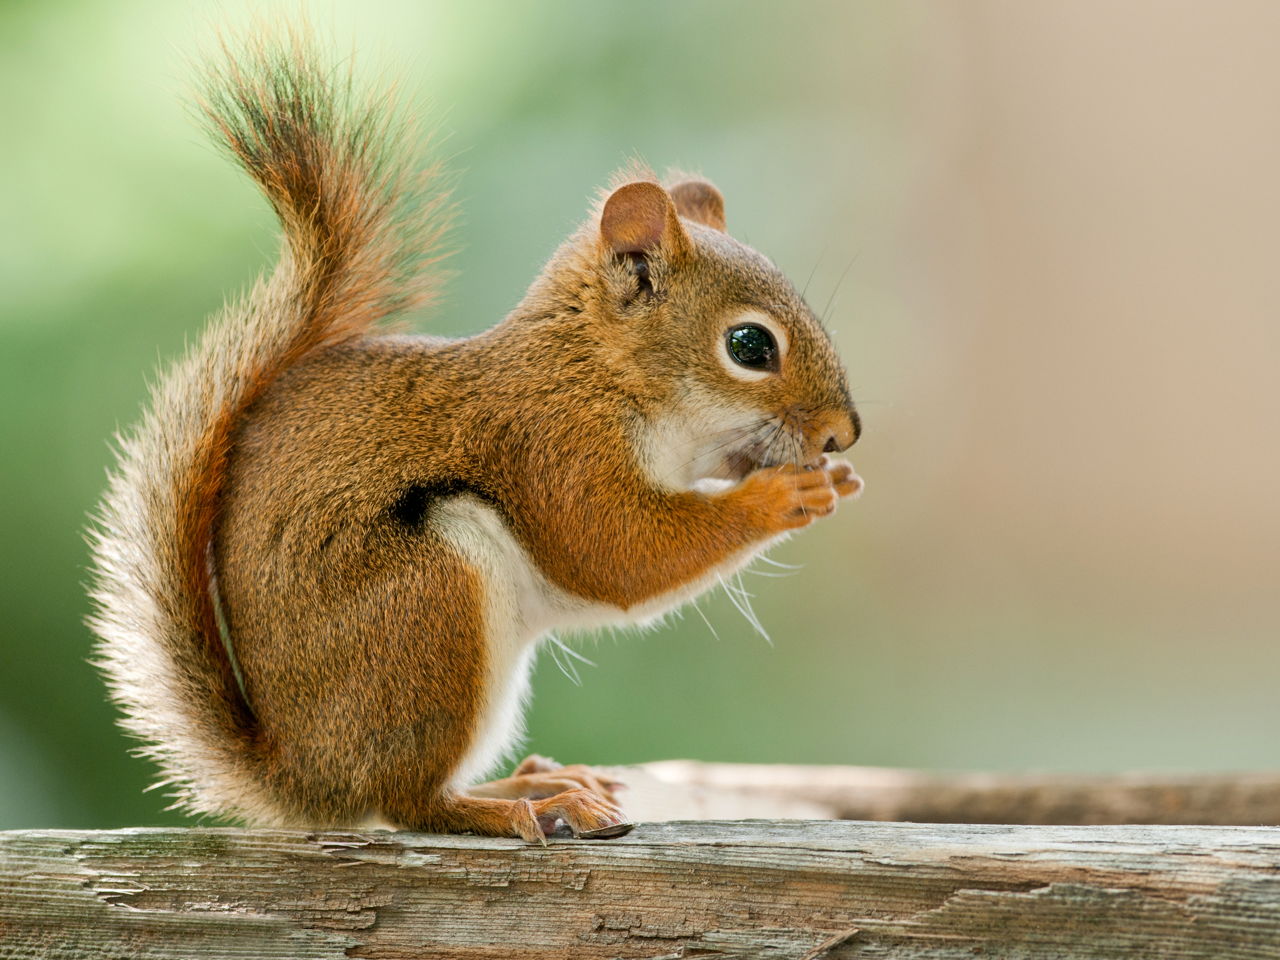 Sleeping and Nesting Habits of Squirrels - Animal Sake